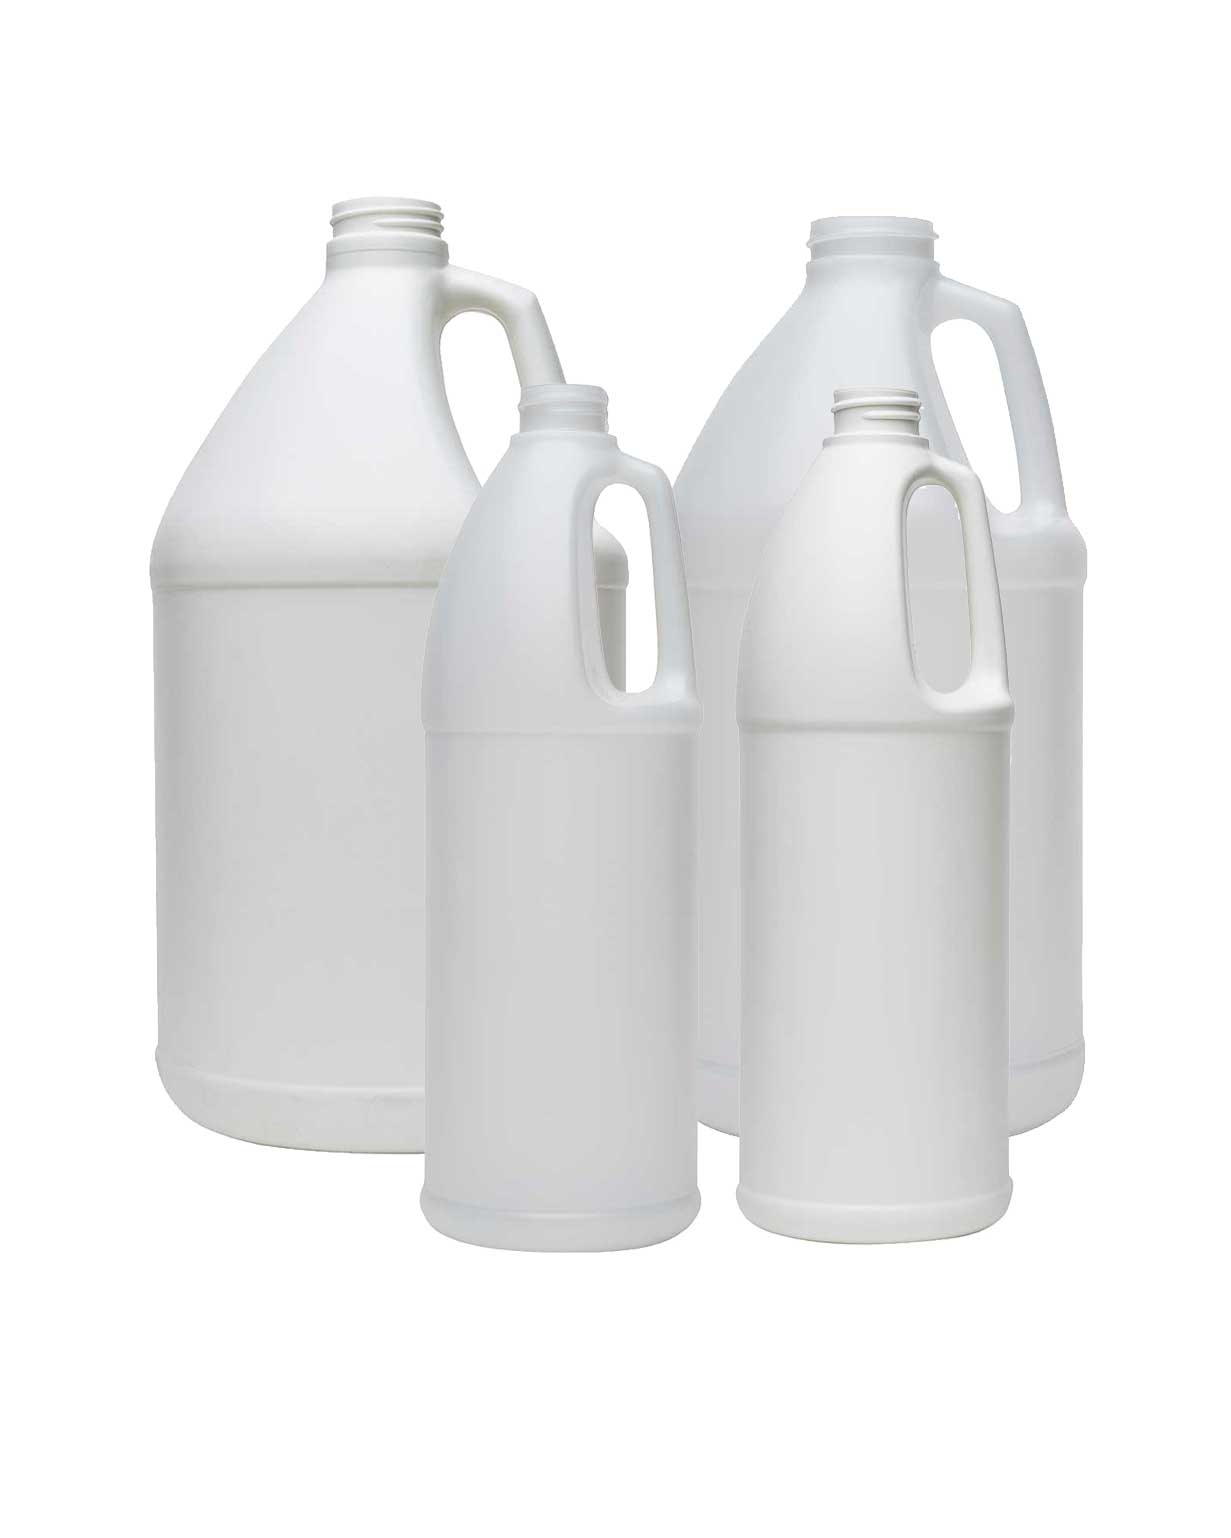 Plastic Industrial Round Jug Bottles product